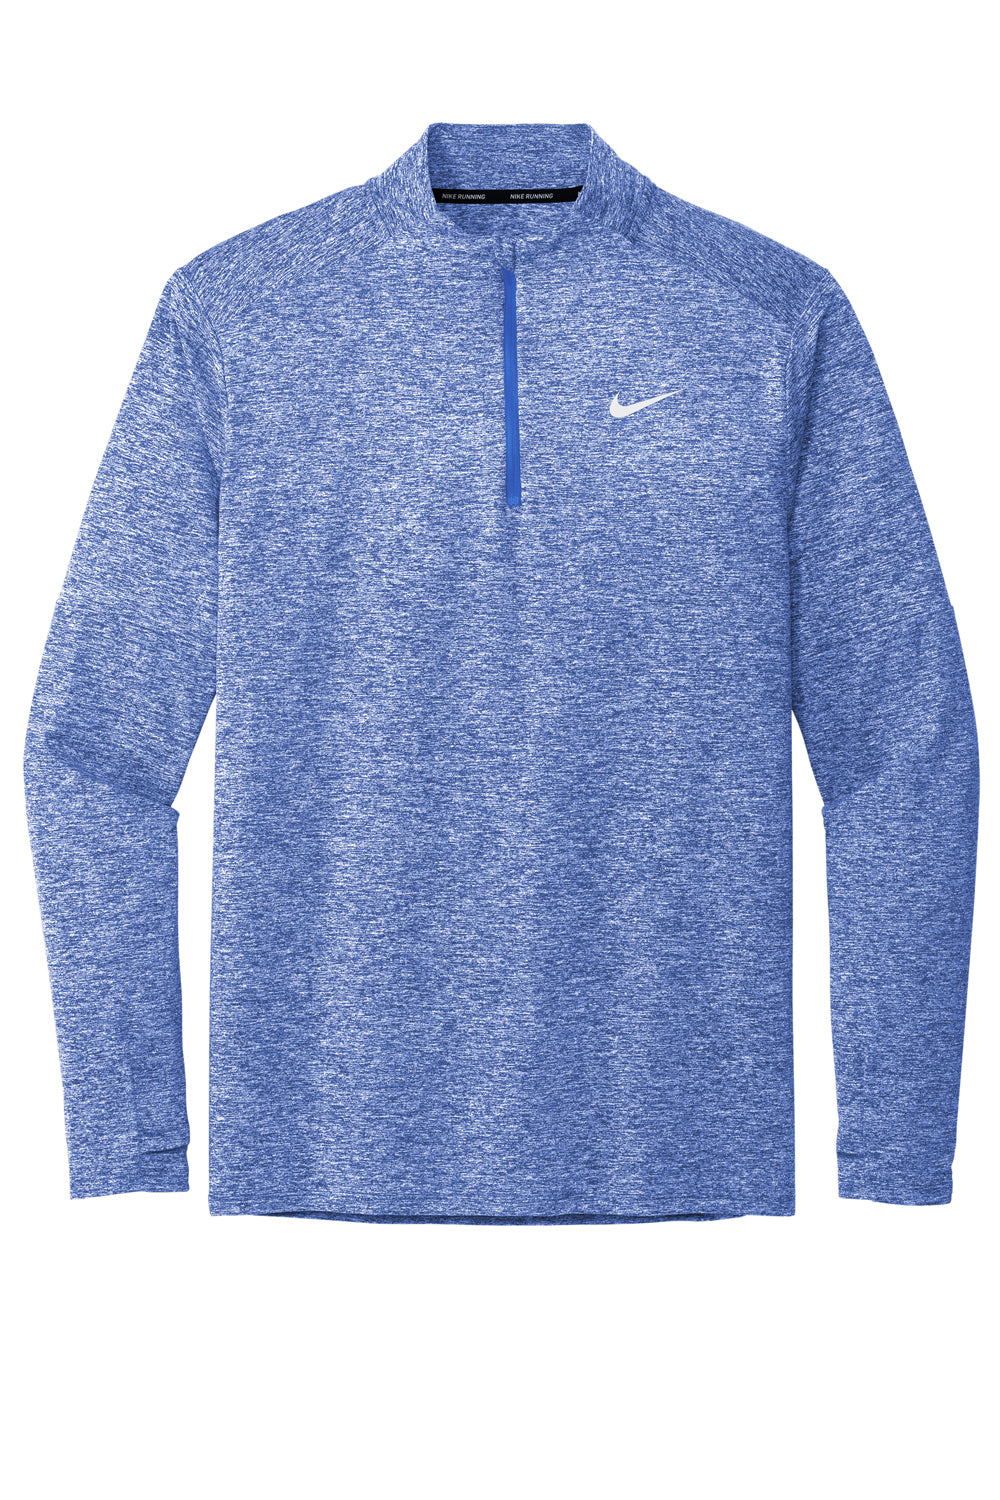 Nike NKDH4949 Mens Element Dri-Fit Moisture Wicking 1/4 Zip Sweatshirt Heather Royal Blue Flat Front